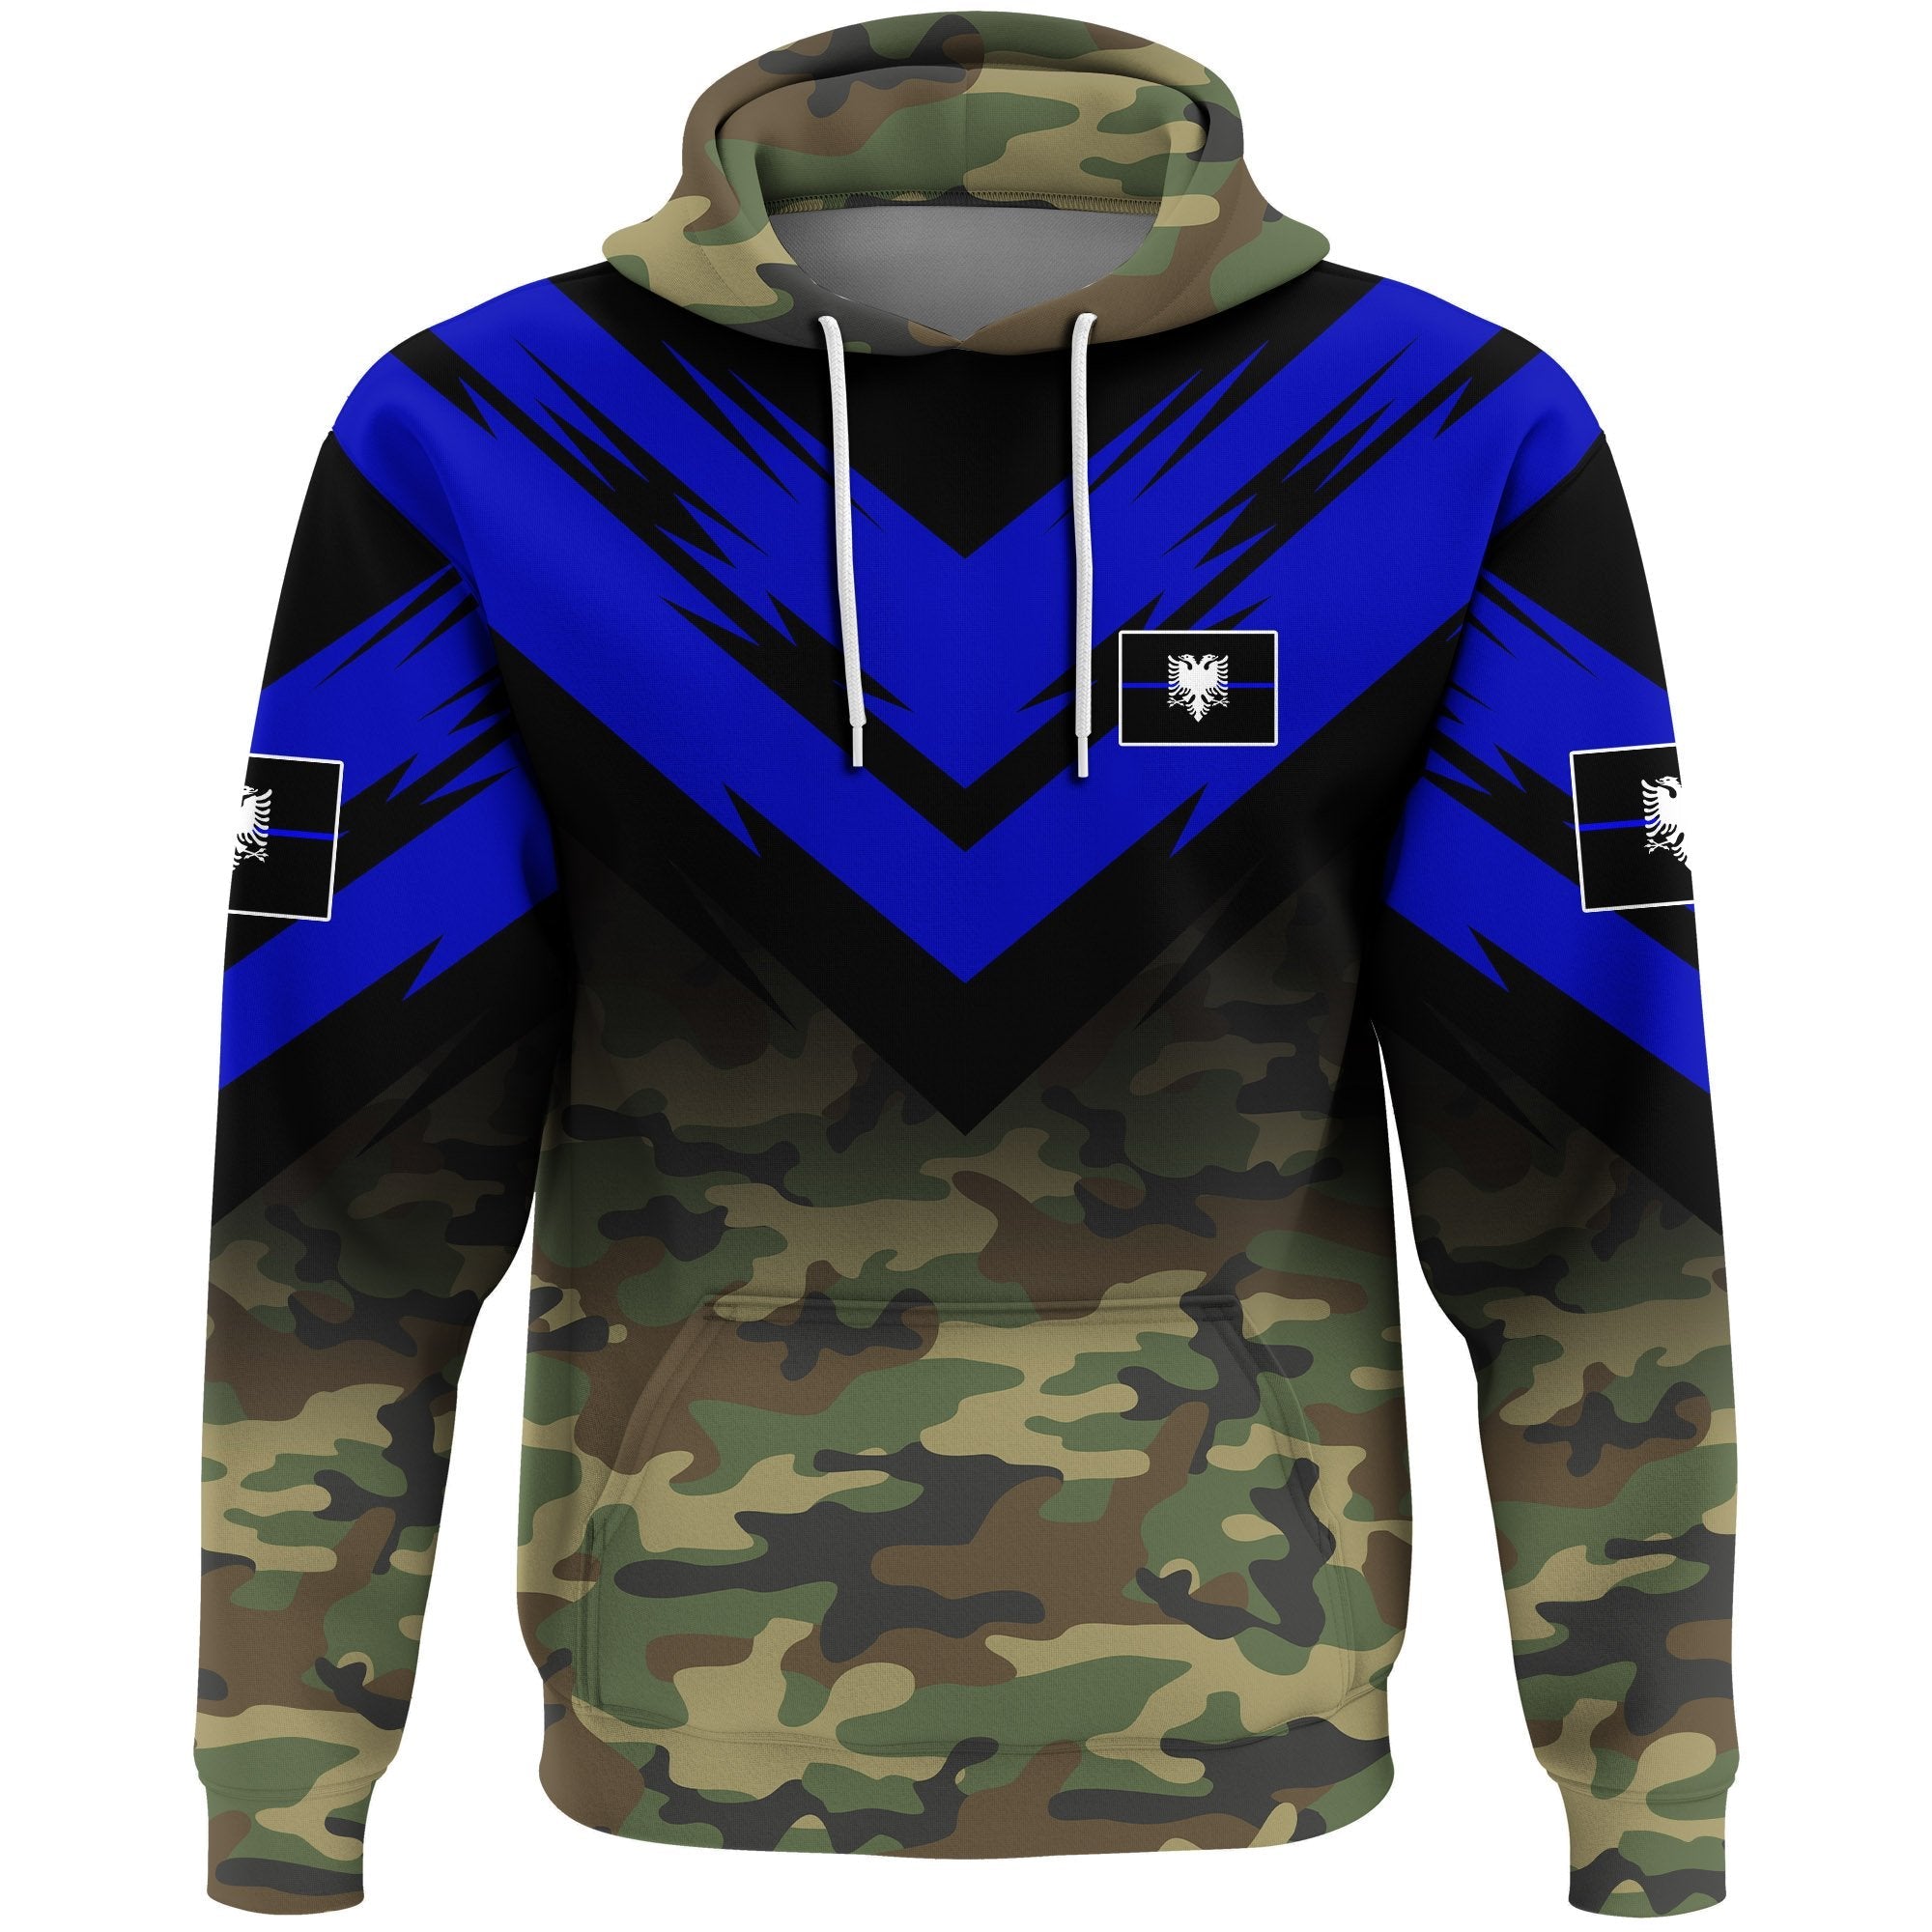 albania-flag-hoodie-based-version-of-the-thin-blue-line-symbol